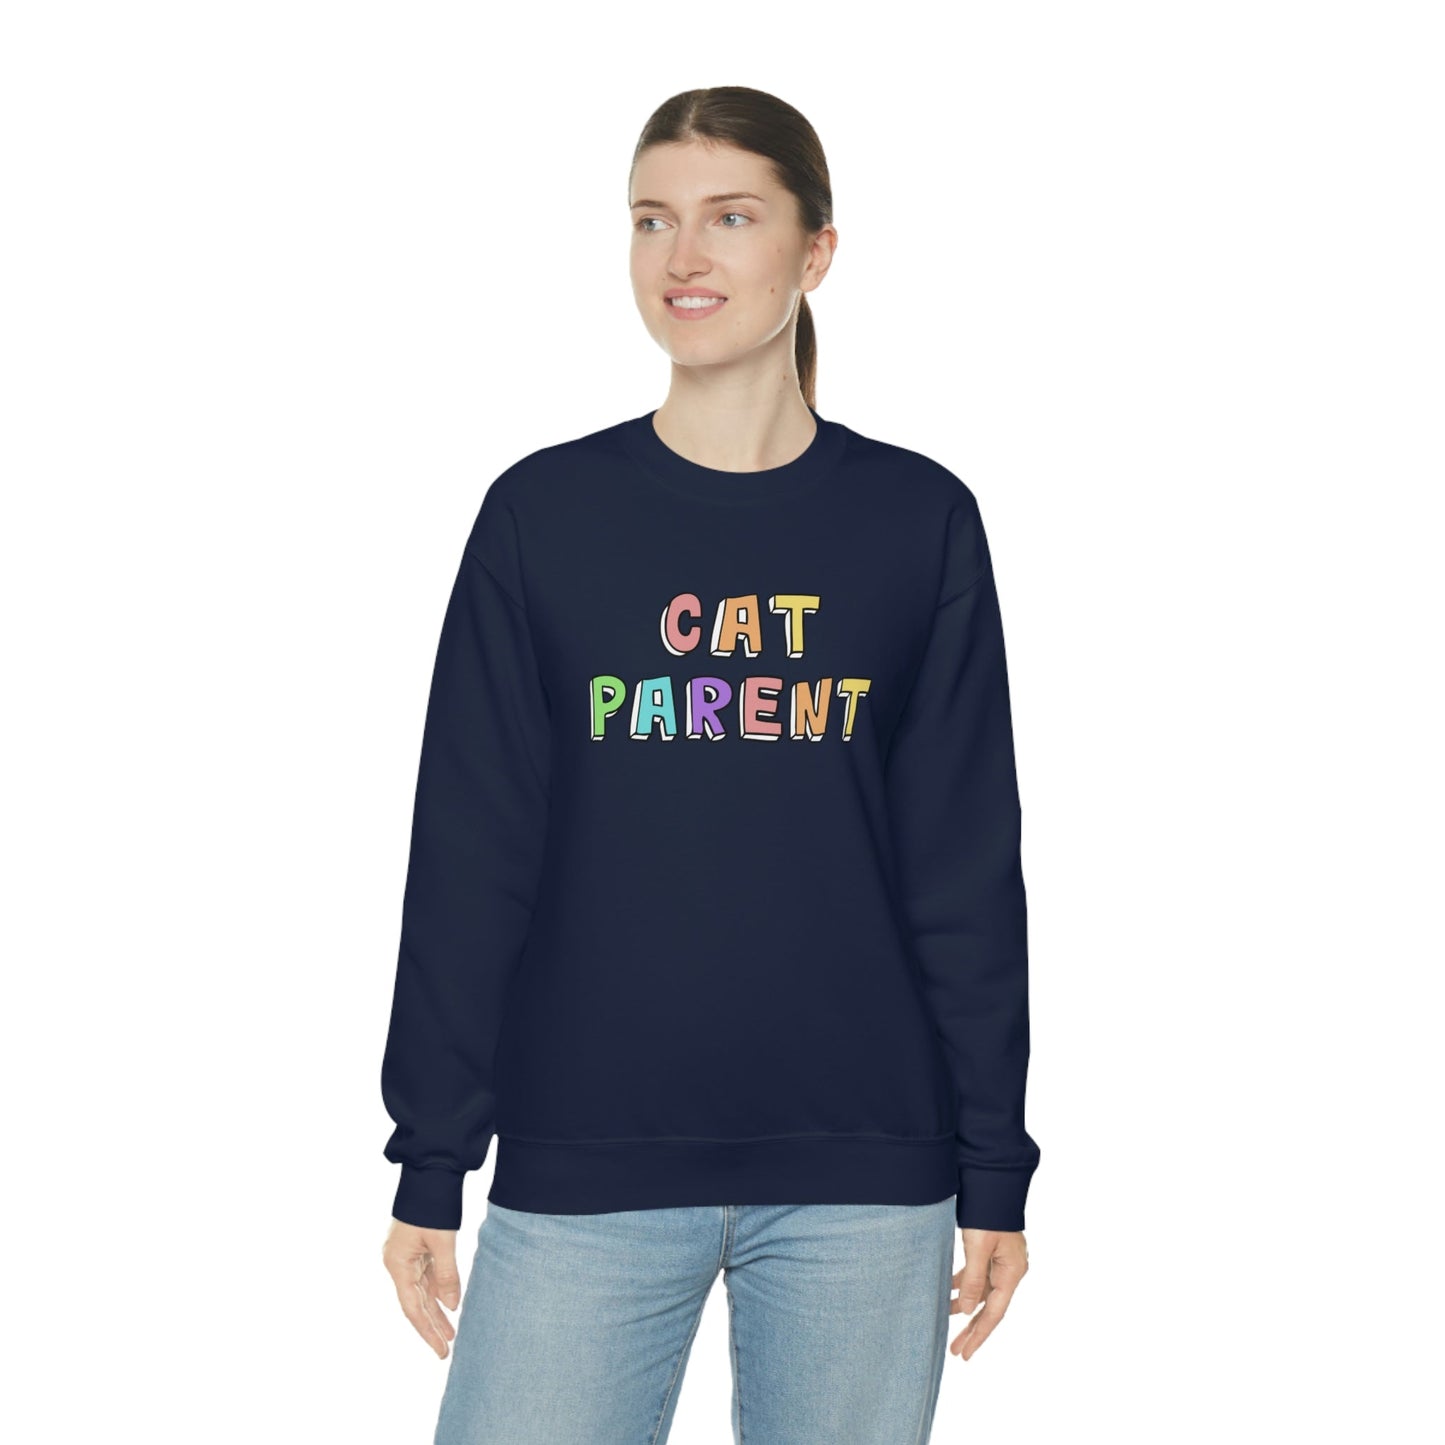 Cat Parent | Crewneck Sweatshirt - Detezi Designs-25976699475978278793